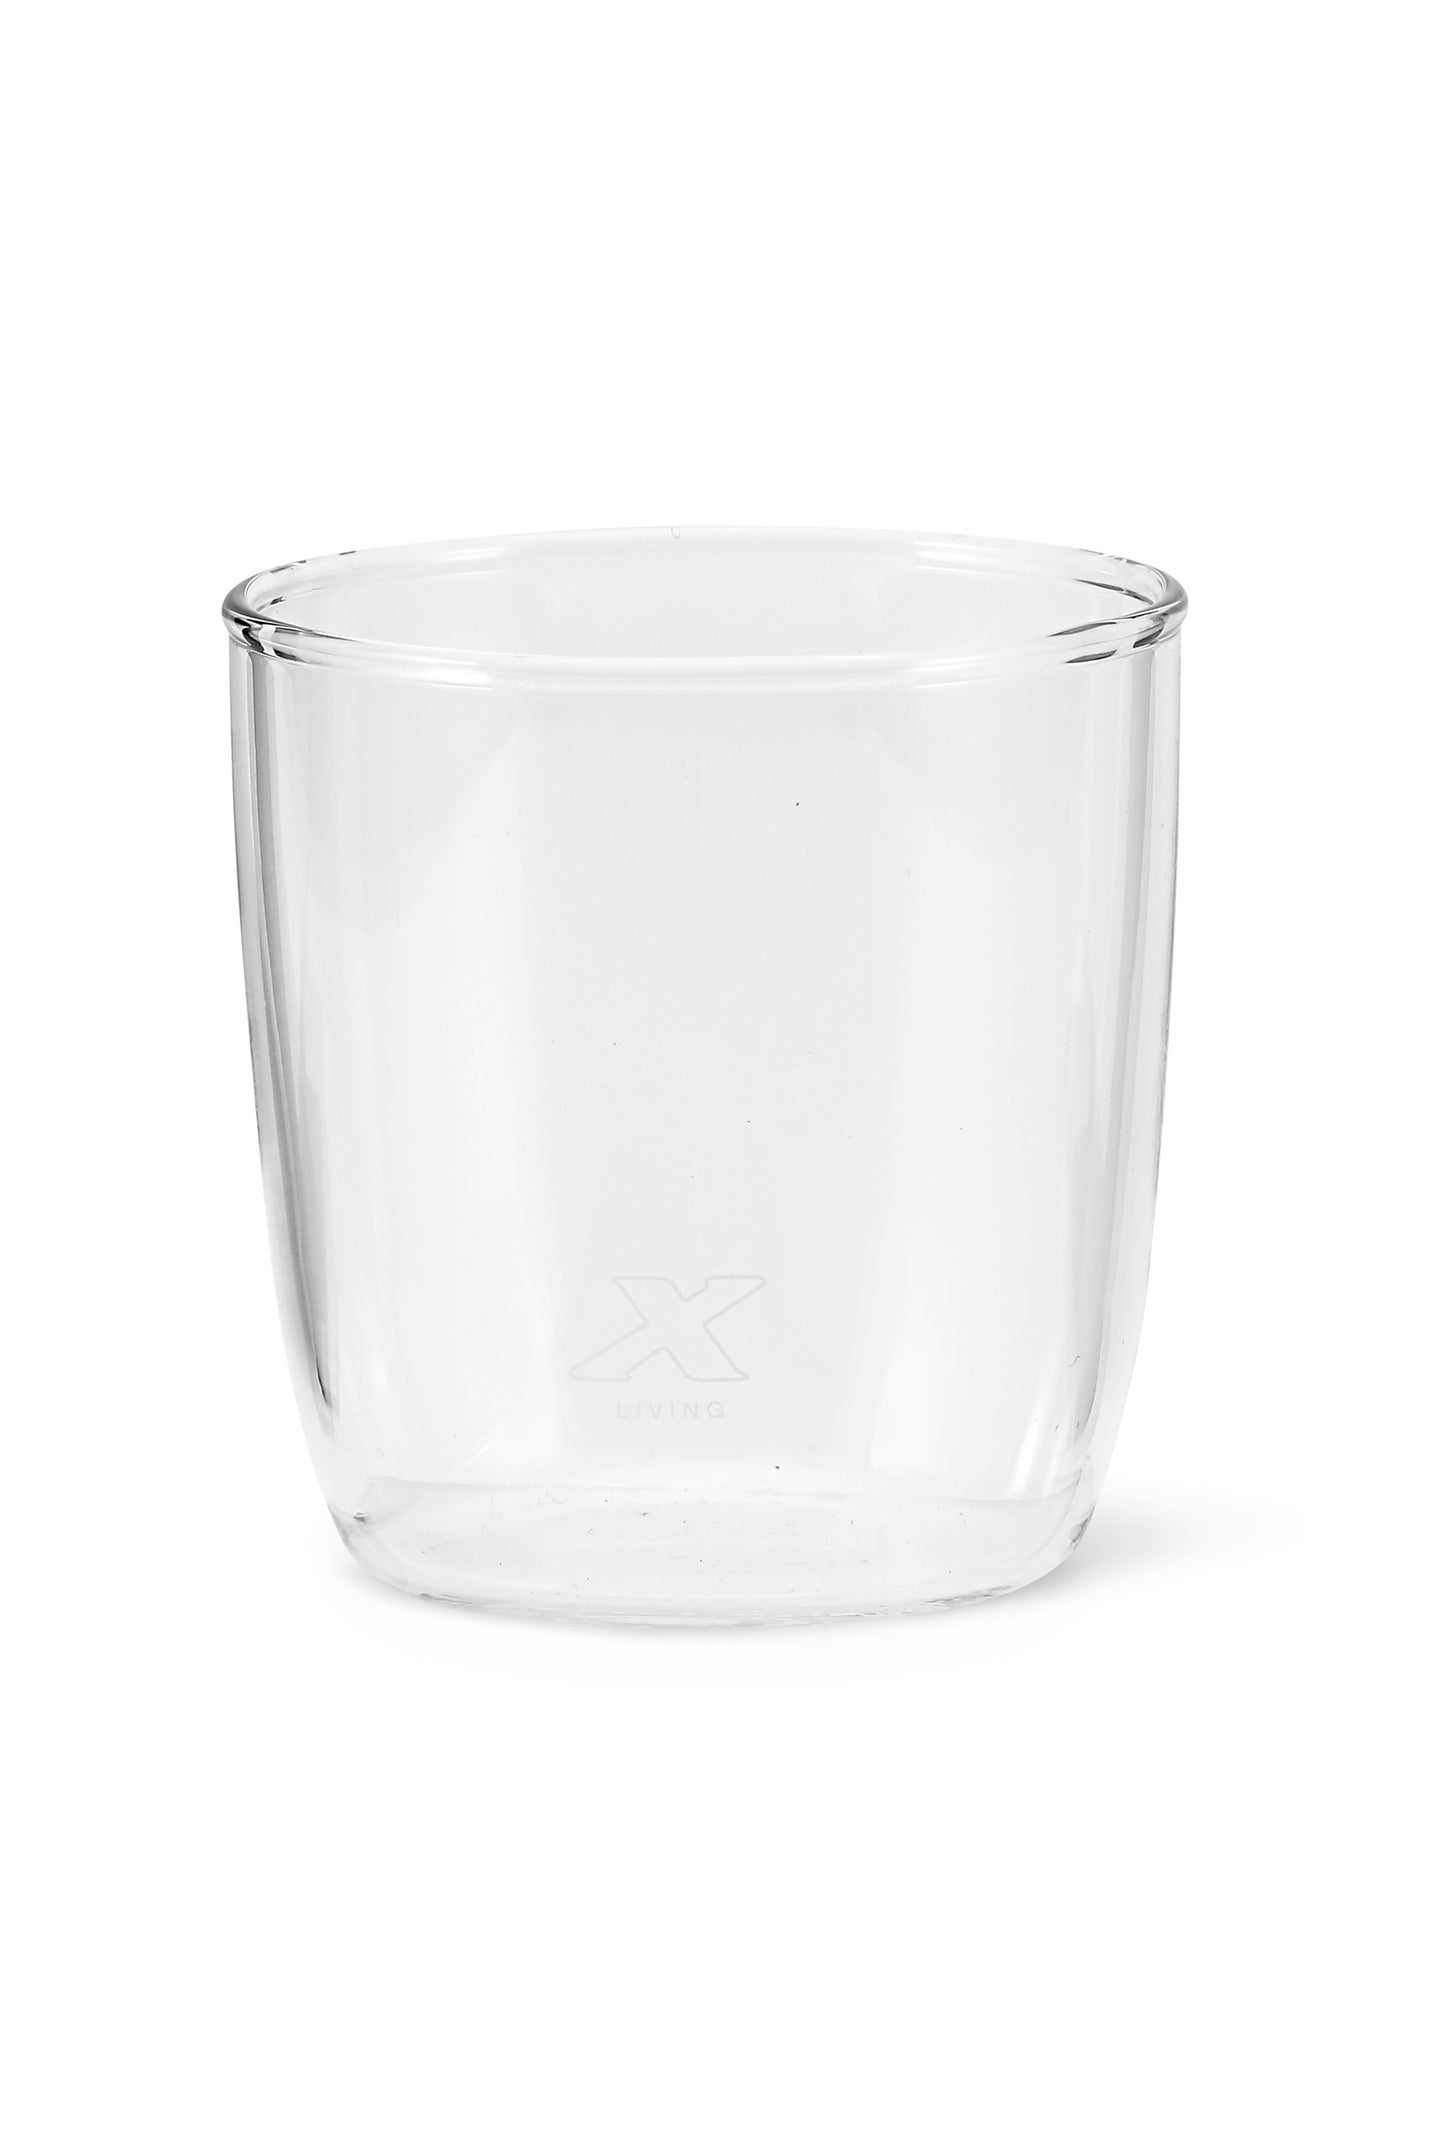 KVADRANT Juice glass (4pcs.)